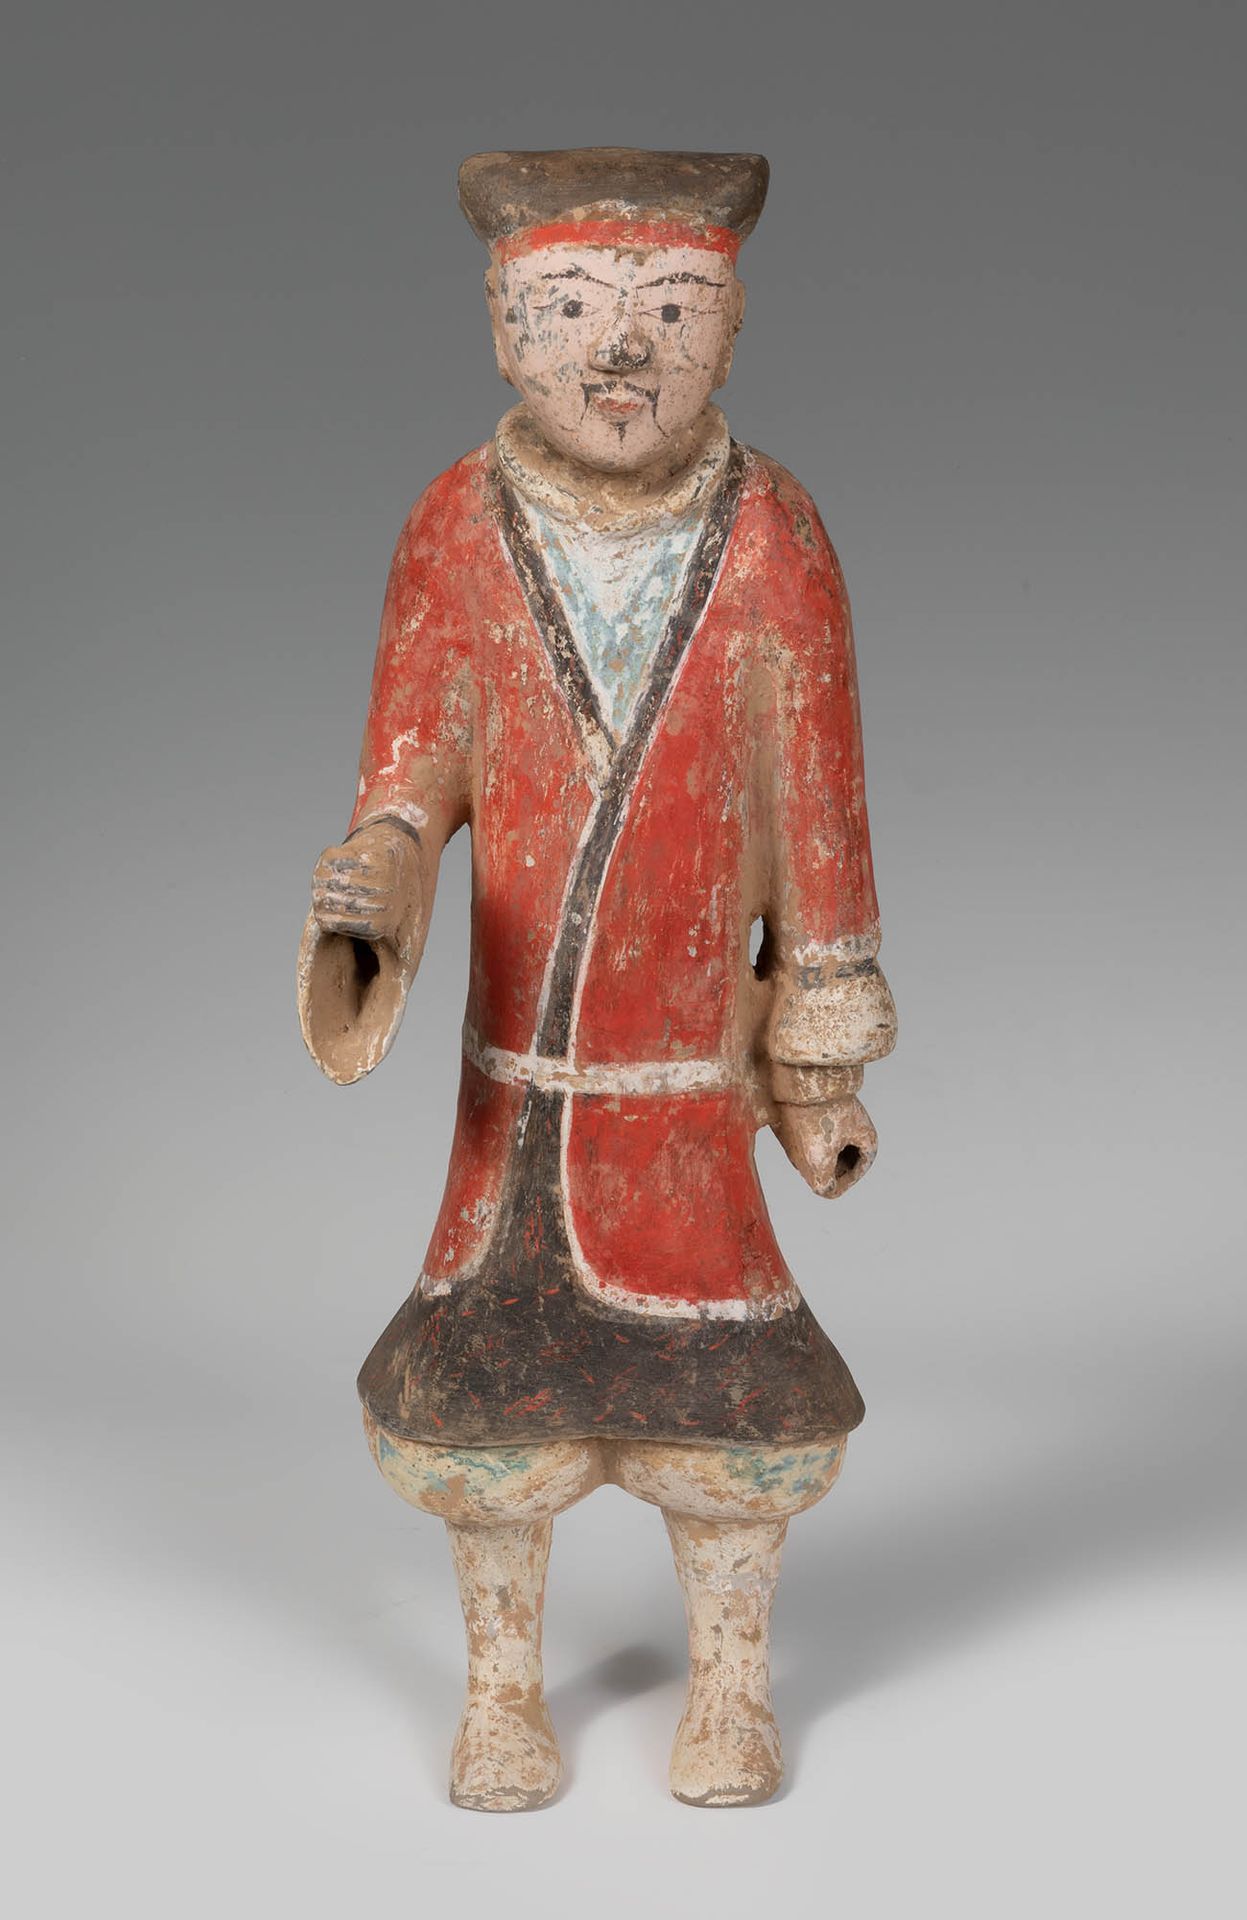 Null Warrior. China, Han Dynasty, 206 BC-220 AD.
Polychrome terracotta.
Measurem&hellip;